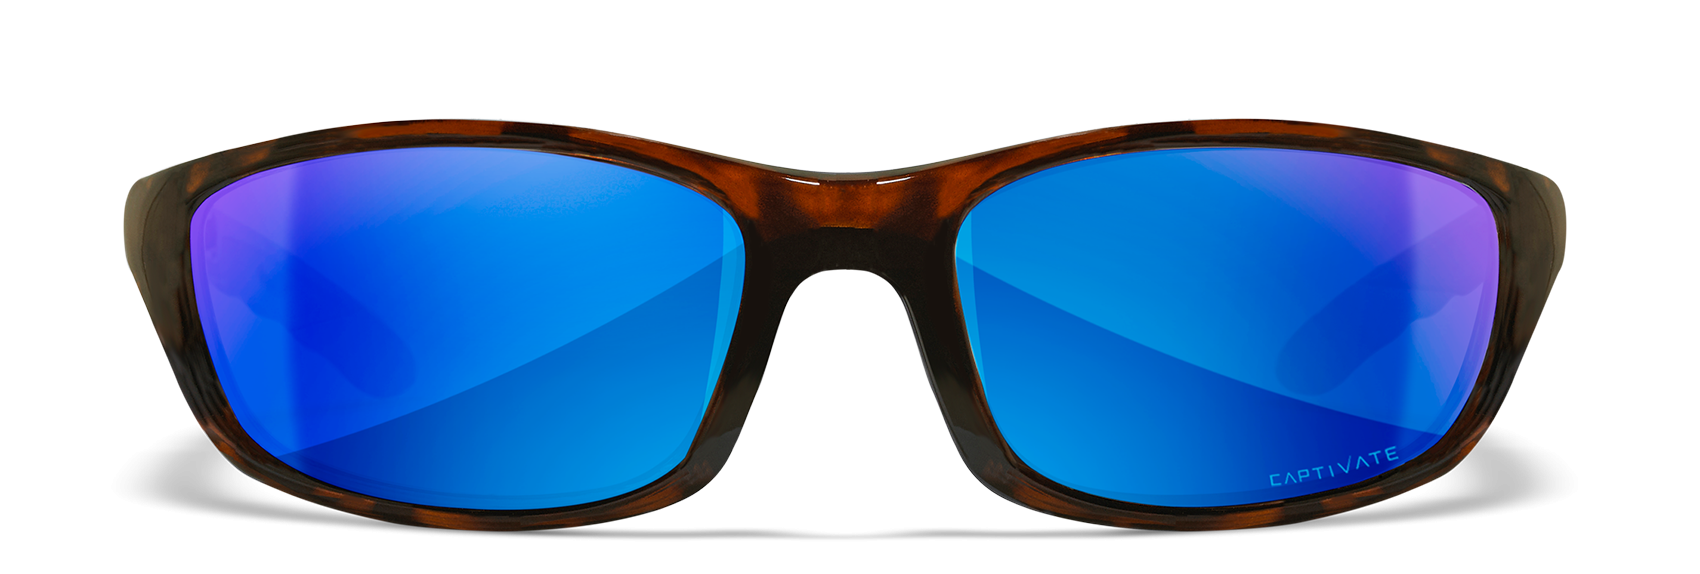 Wiley X P-17 Sunglasses, 2 colors